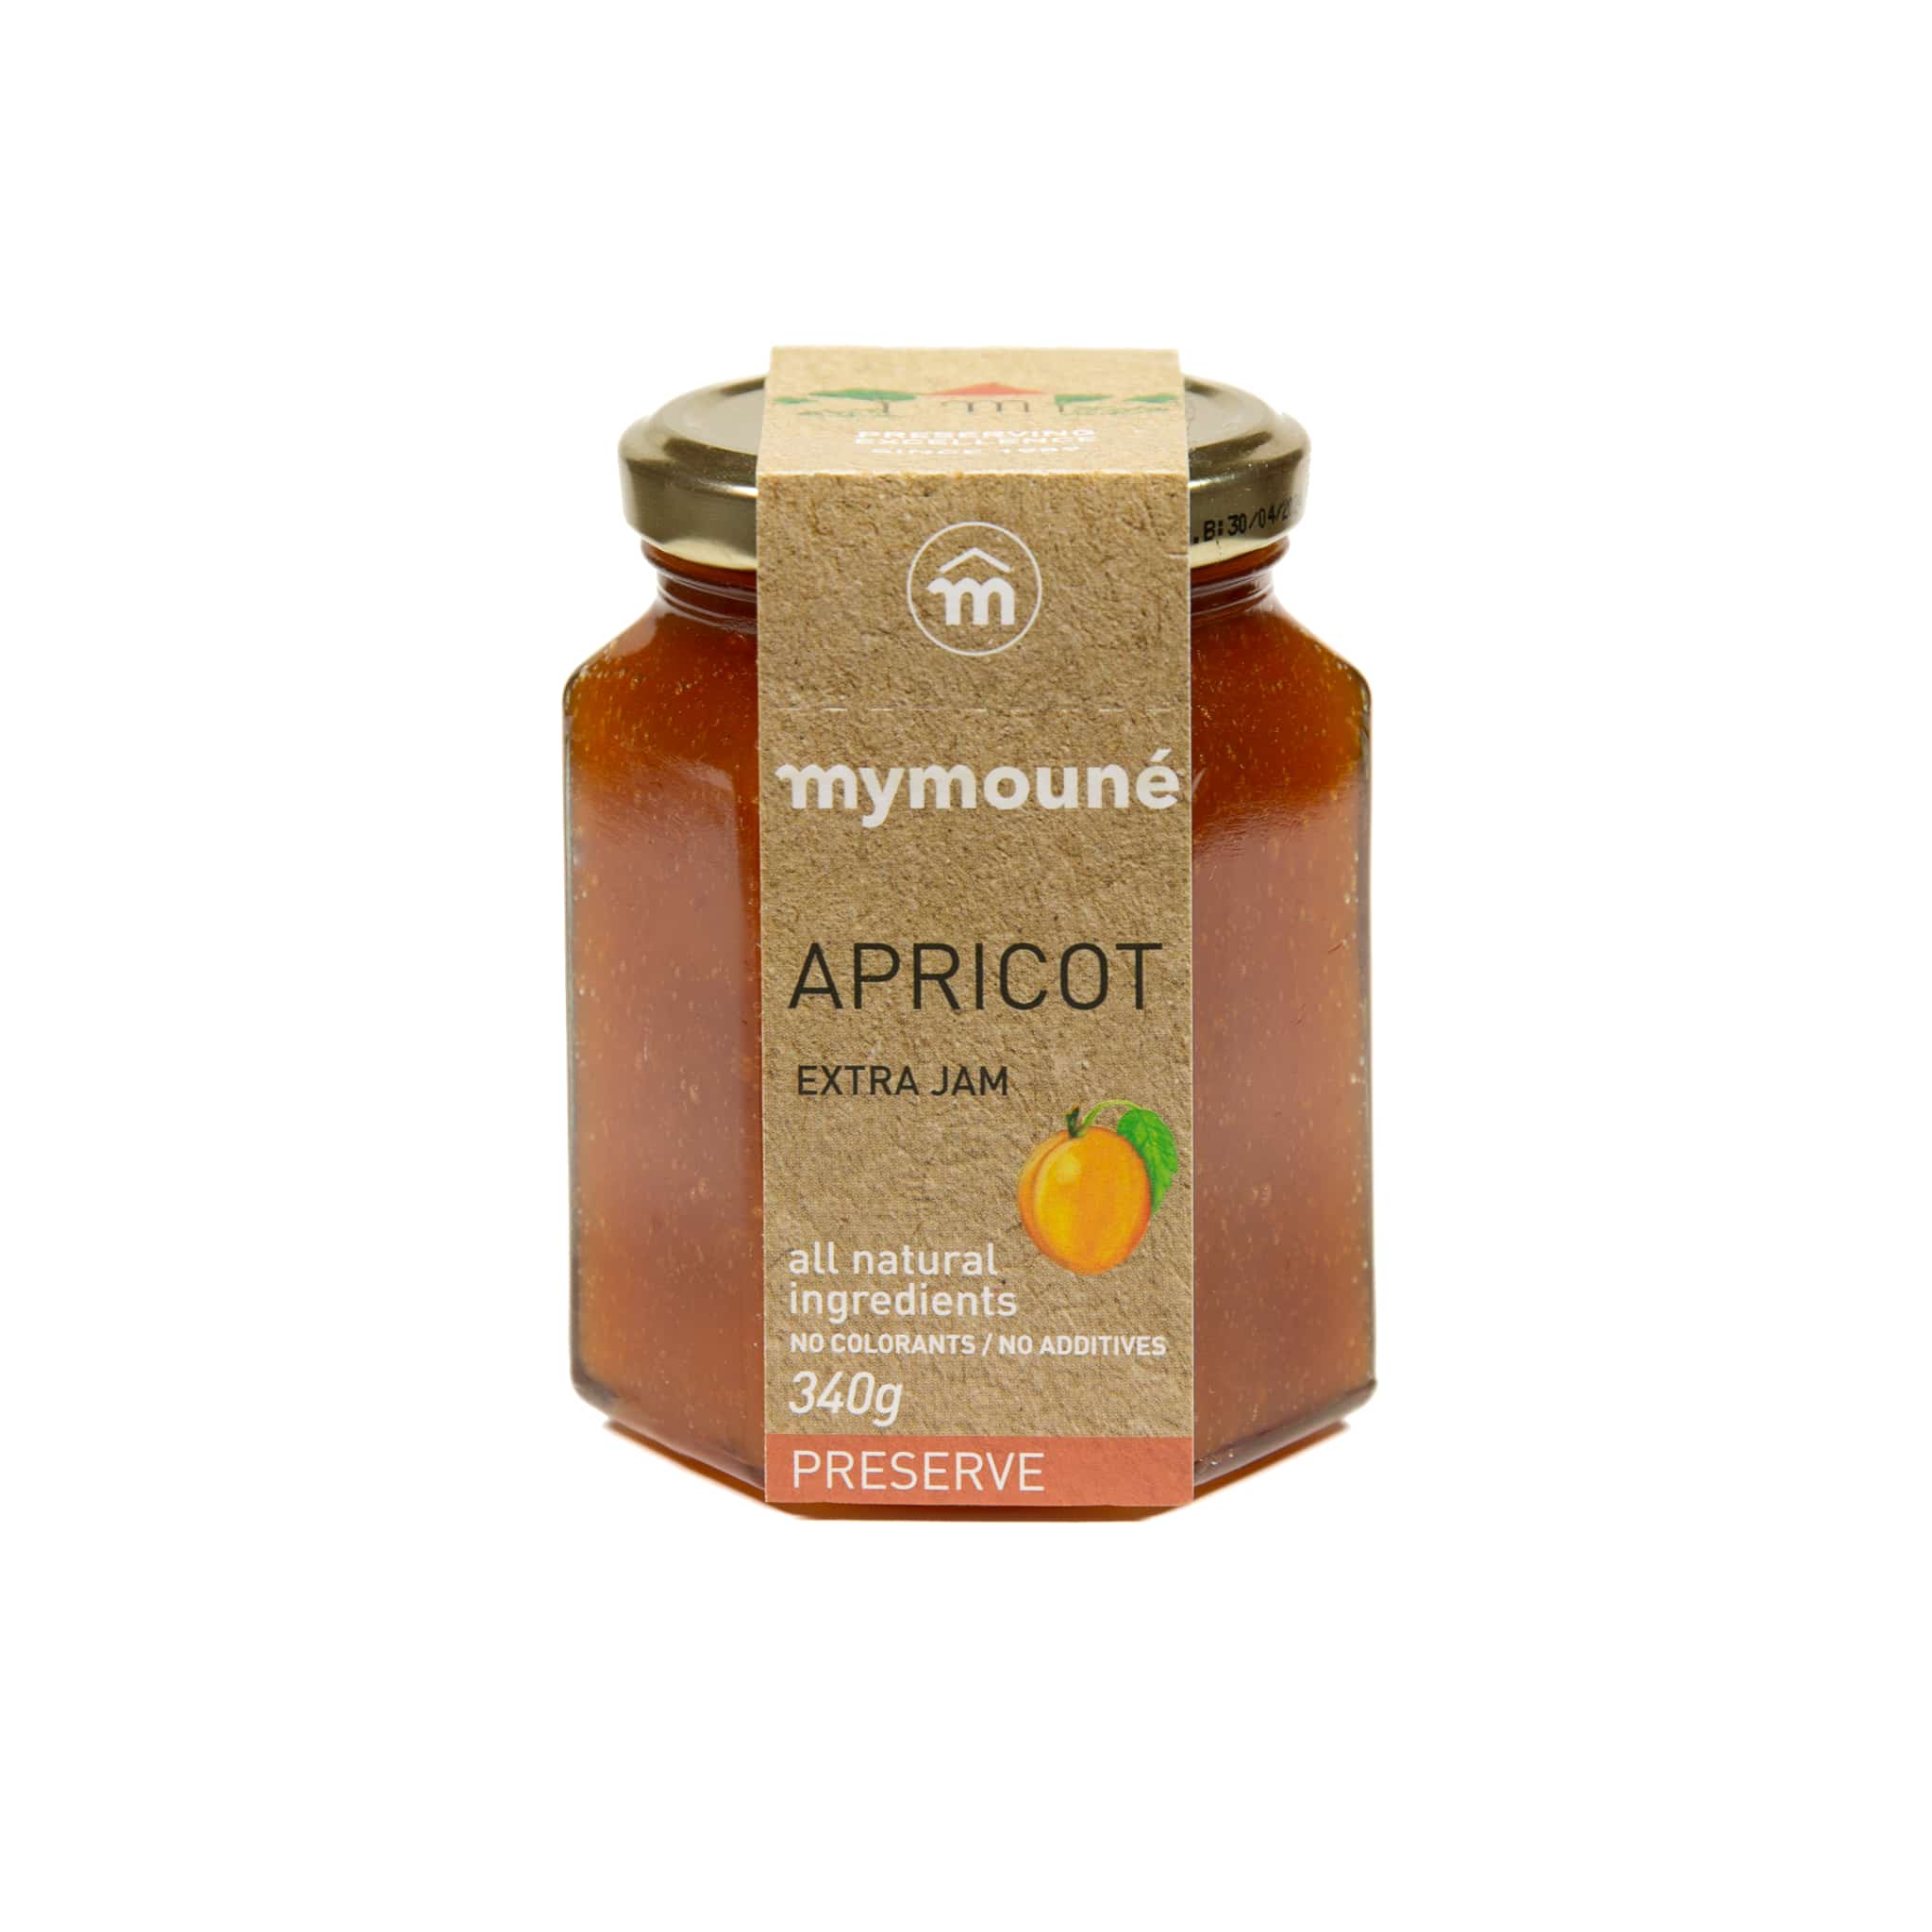 Mymoune Apricot Jam, 340g